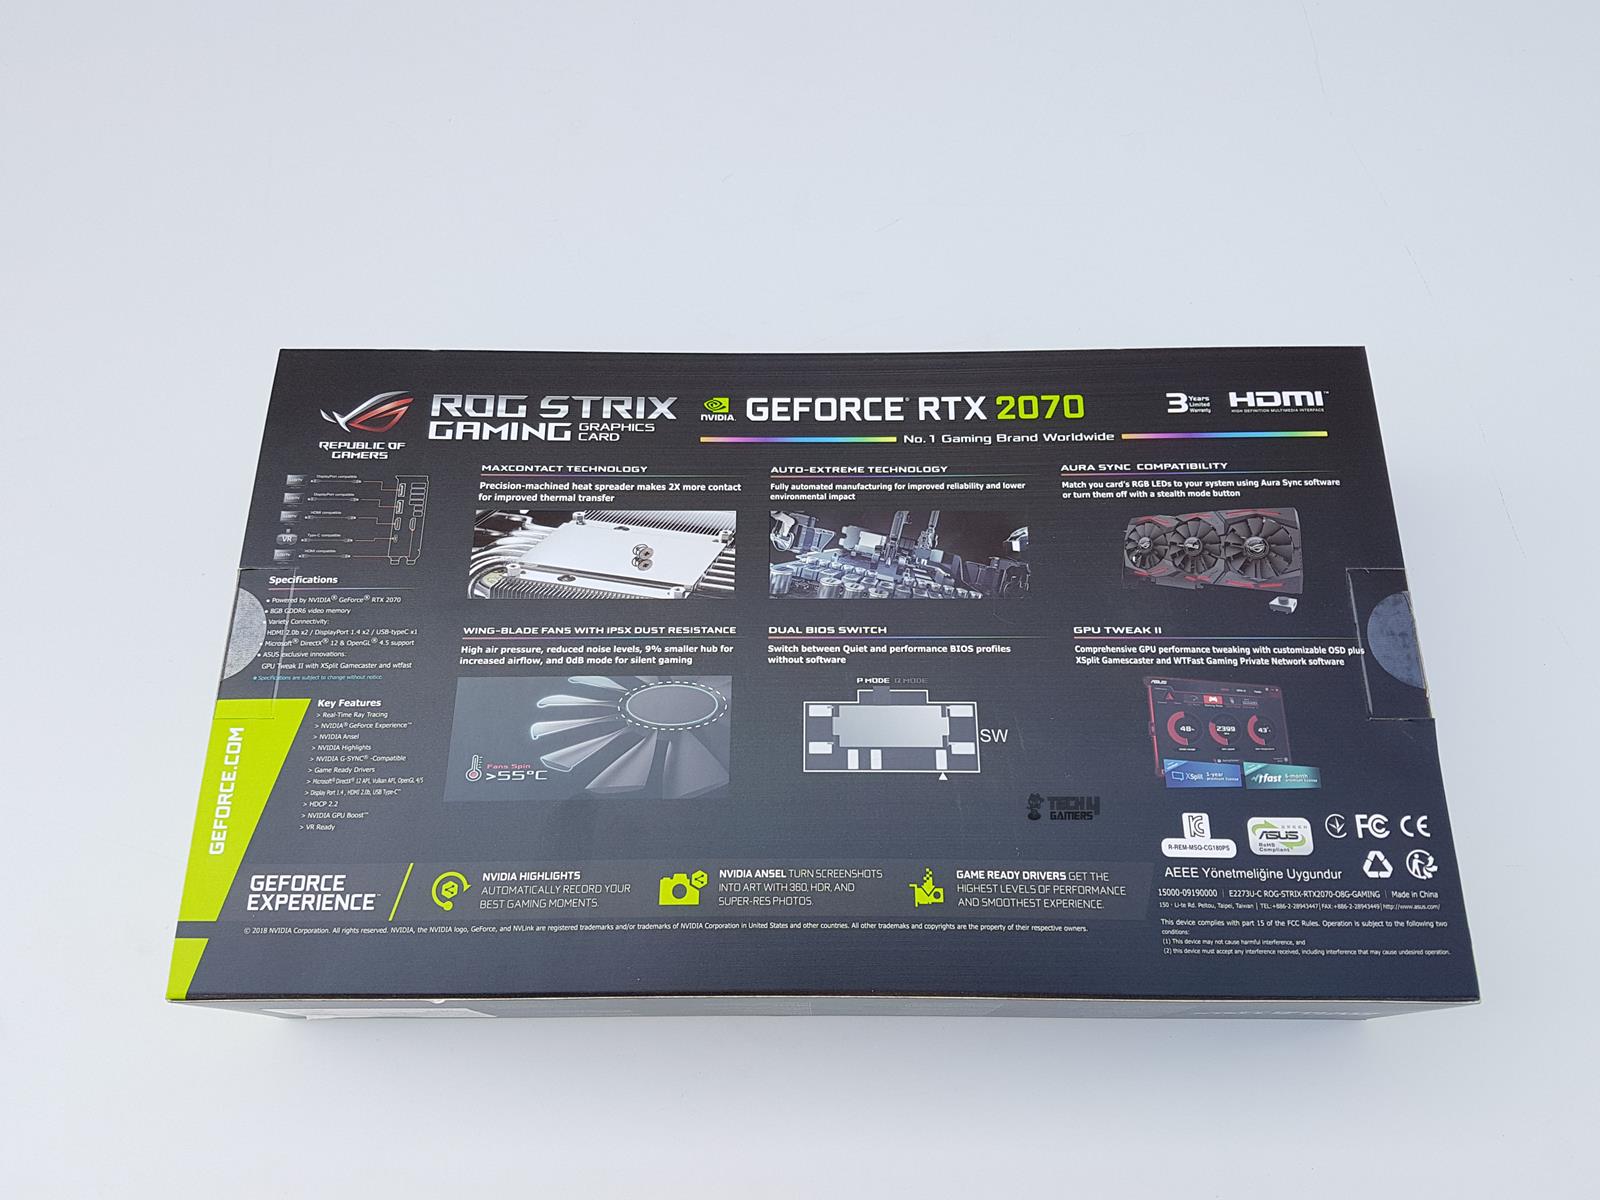 GeForce RTX 2070 Box